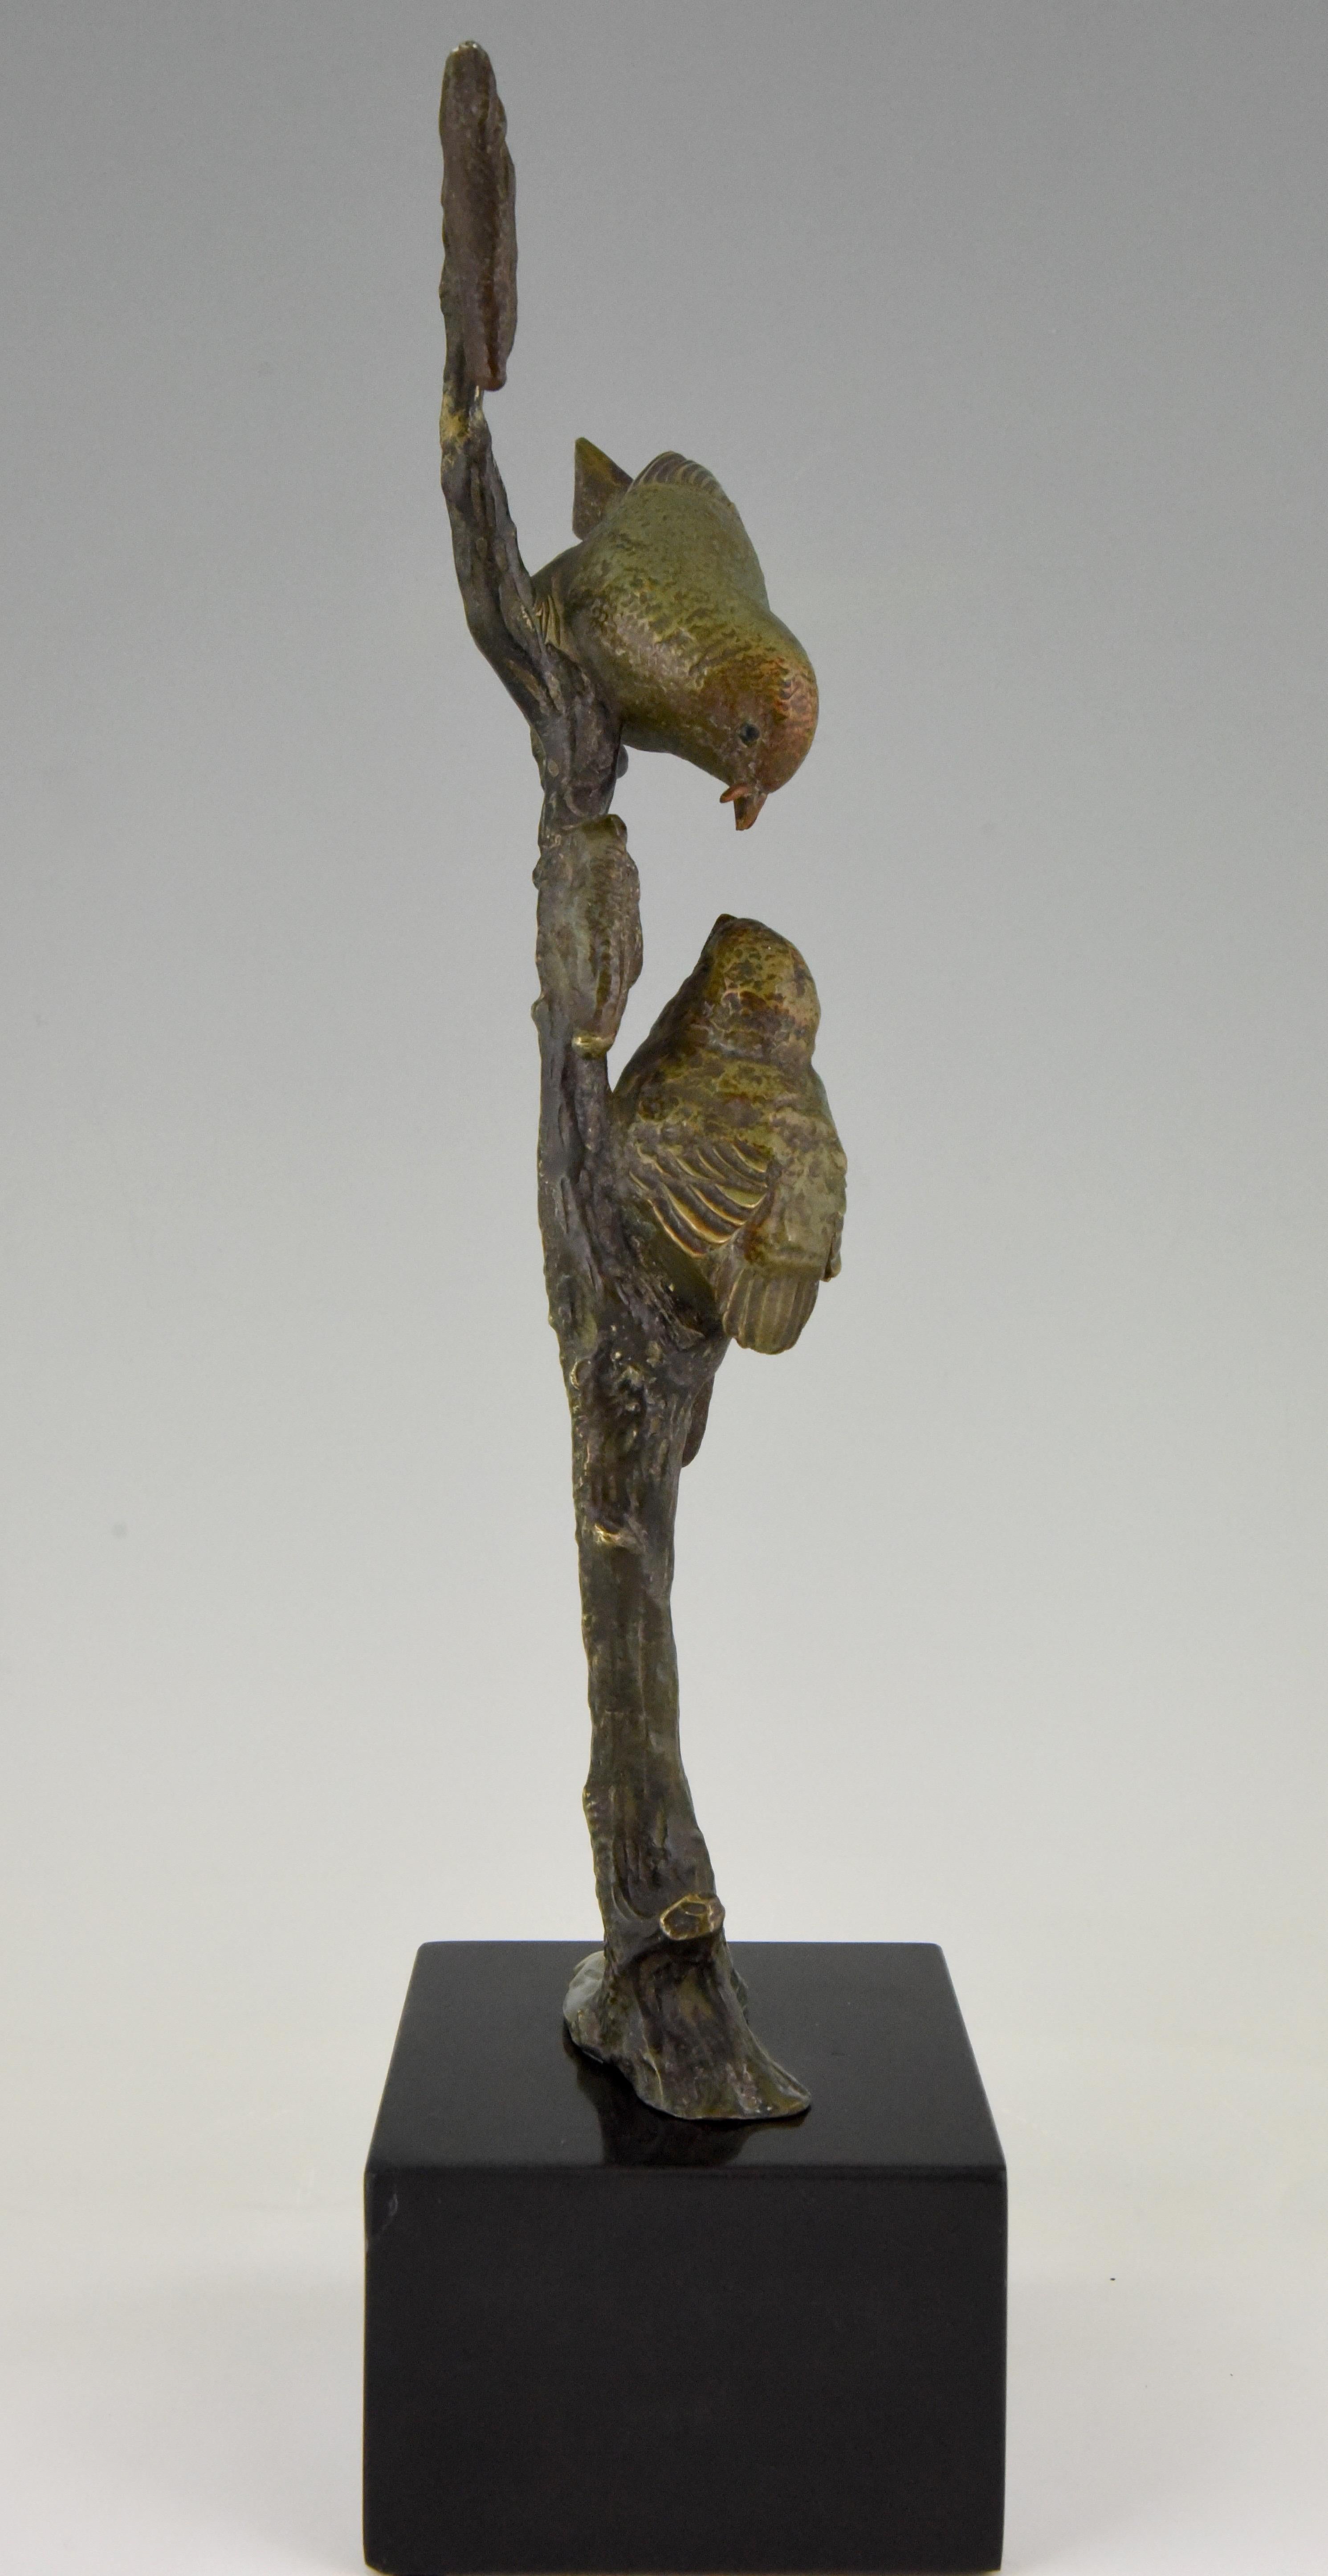 20th Century Art Deco Bronze Sculpture Two Birds on an Branch by Irenee Rochard, 1930